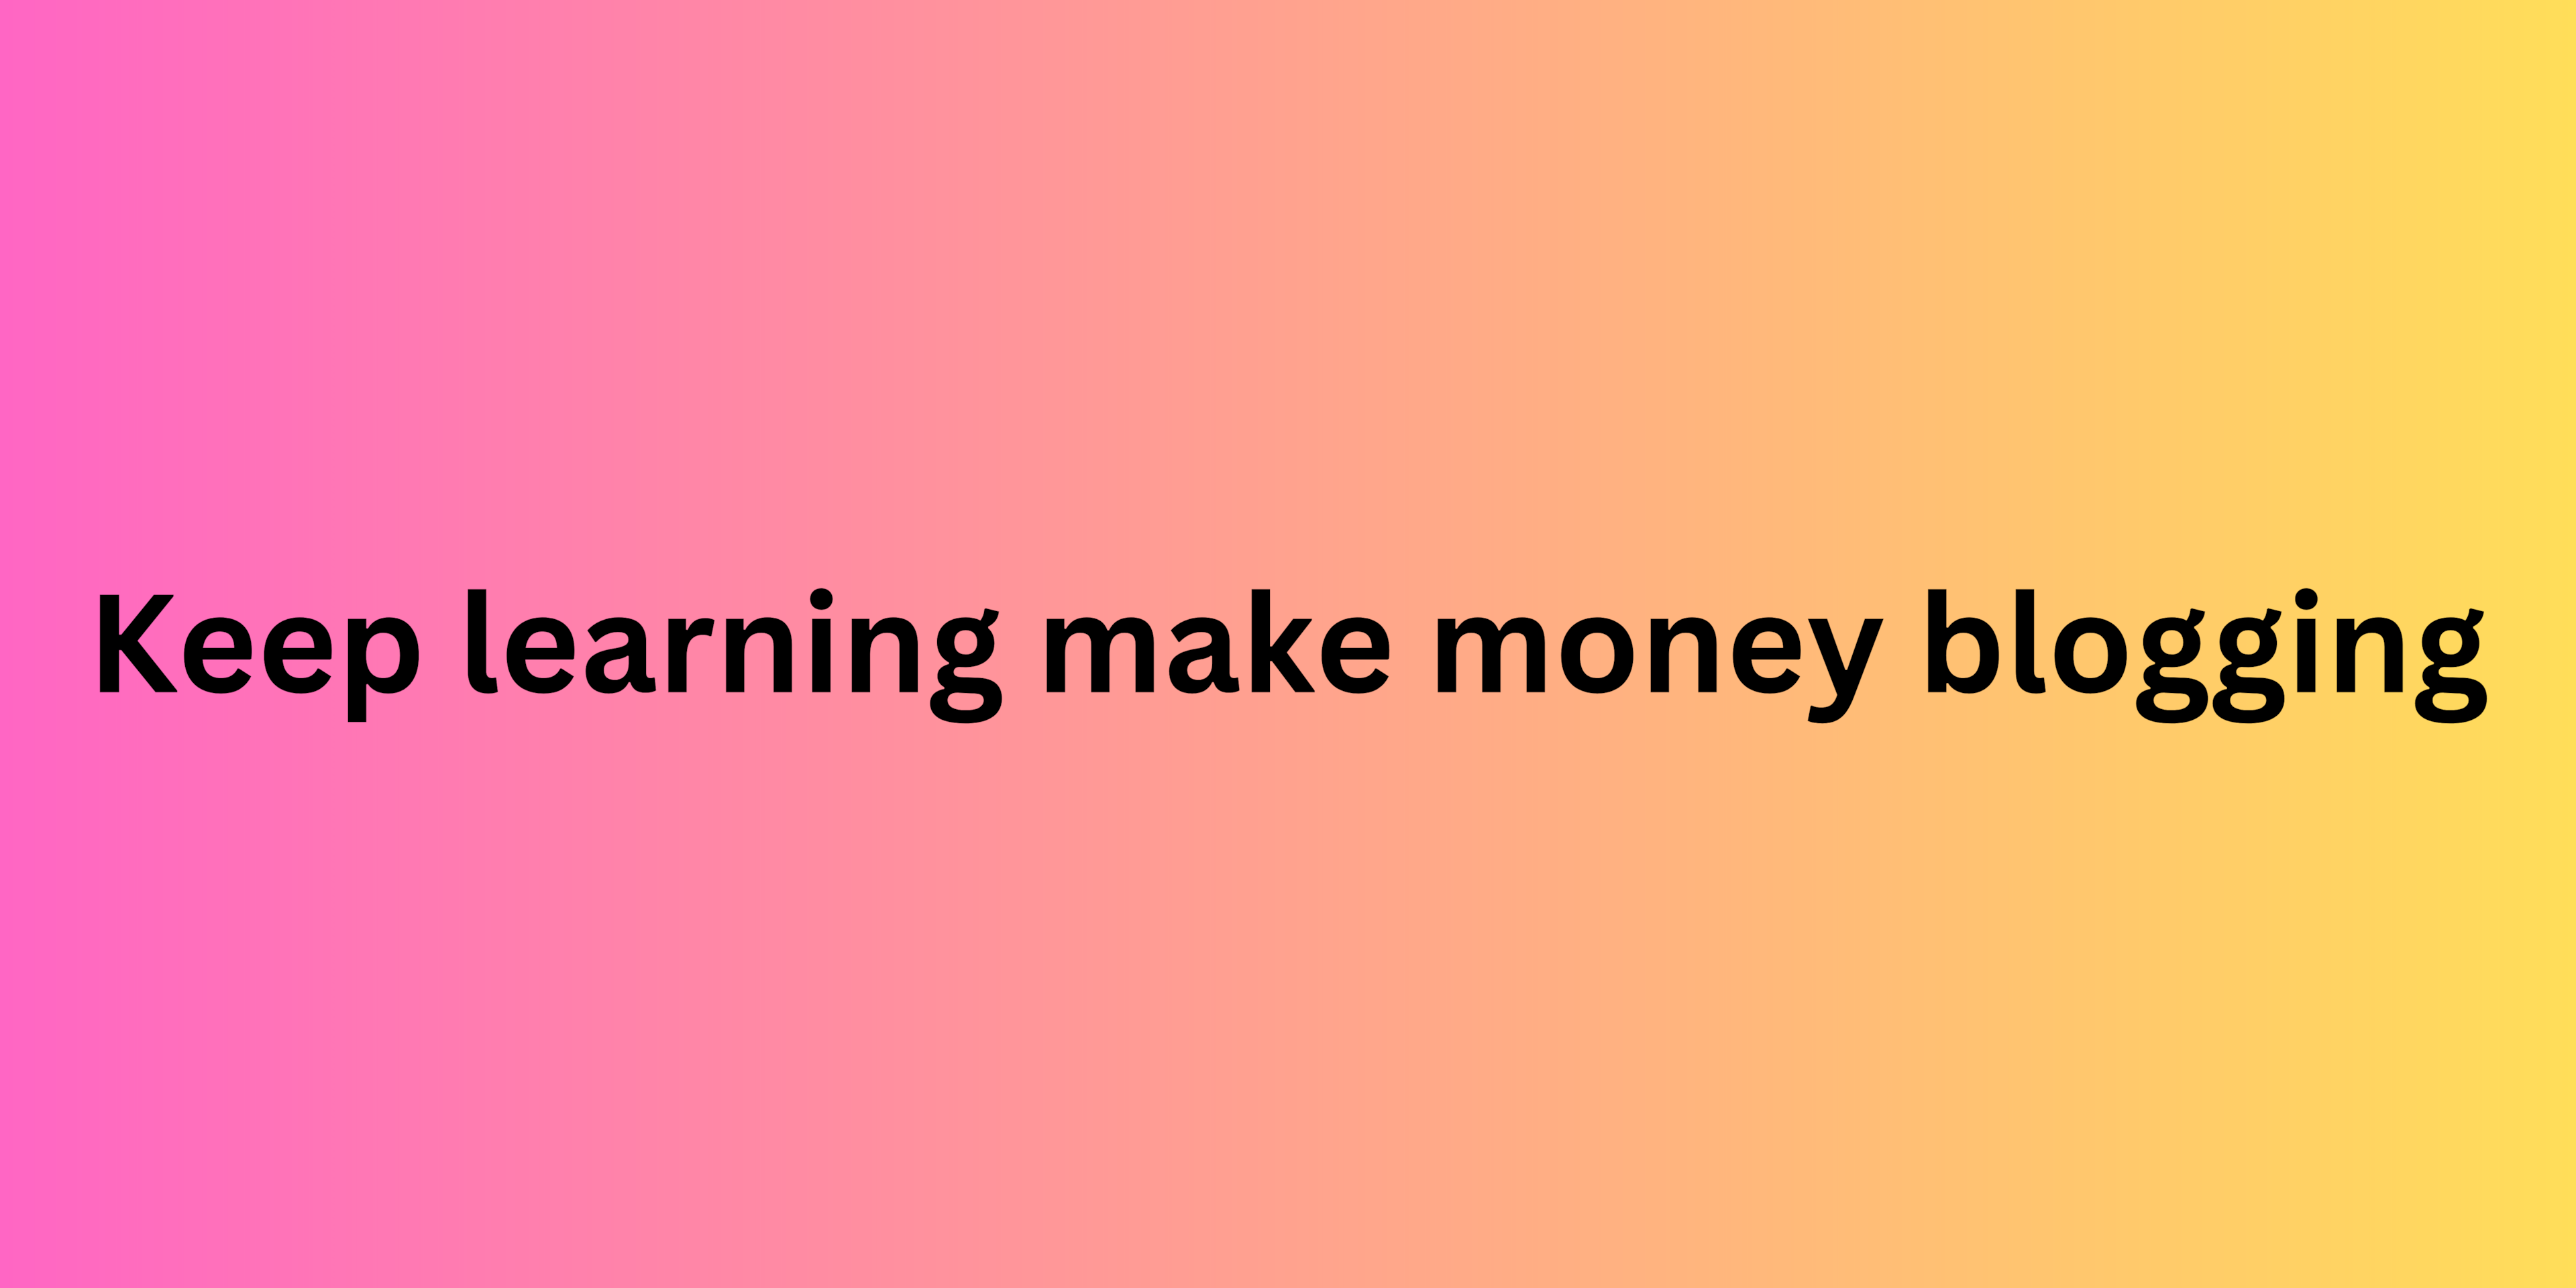 Keep learning make money blogging